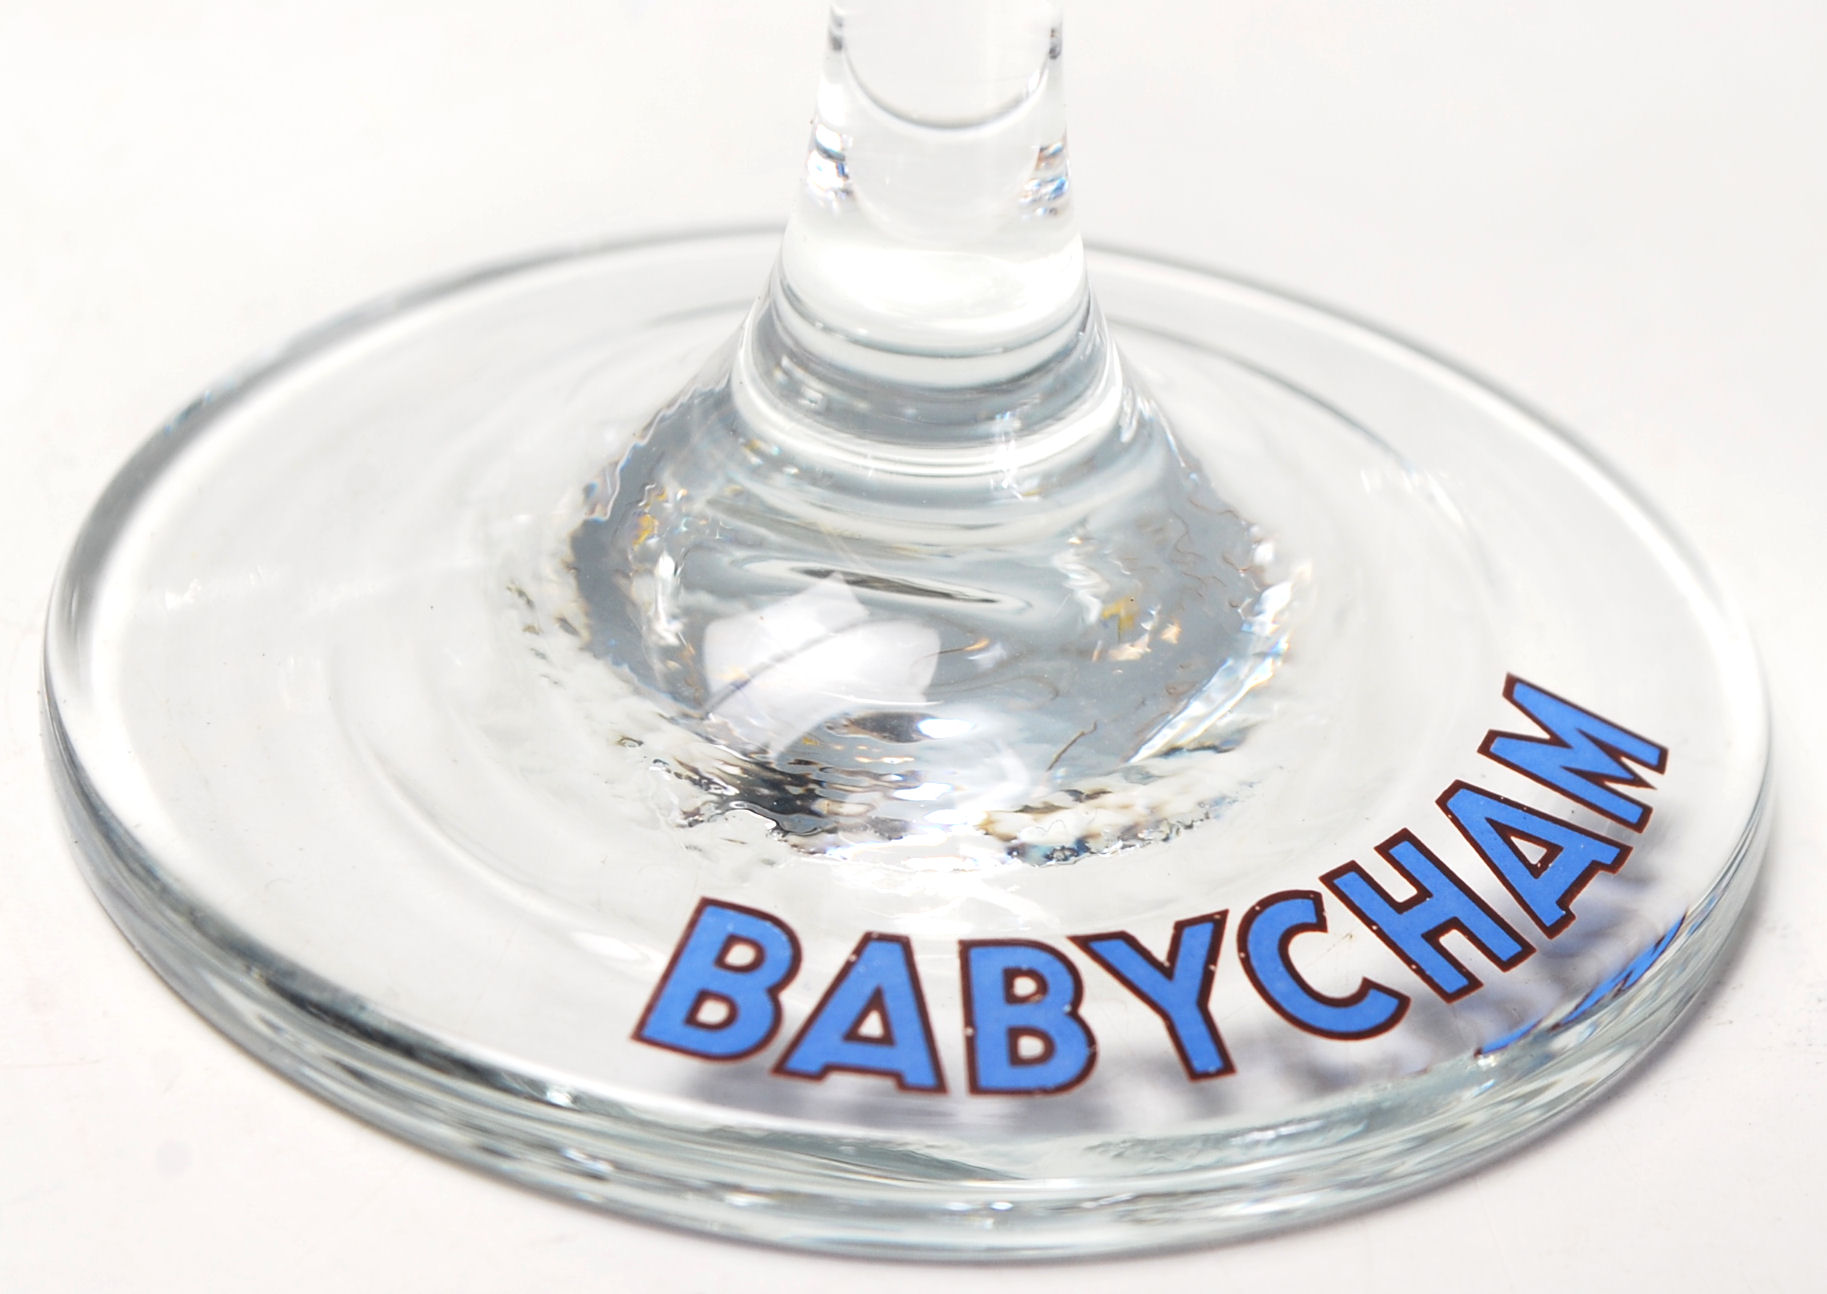 VINTAGE RETRO BABYCHAM GLASSES - Image 4 of 6